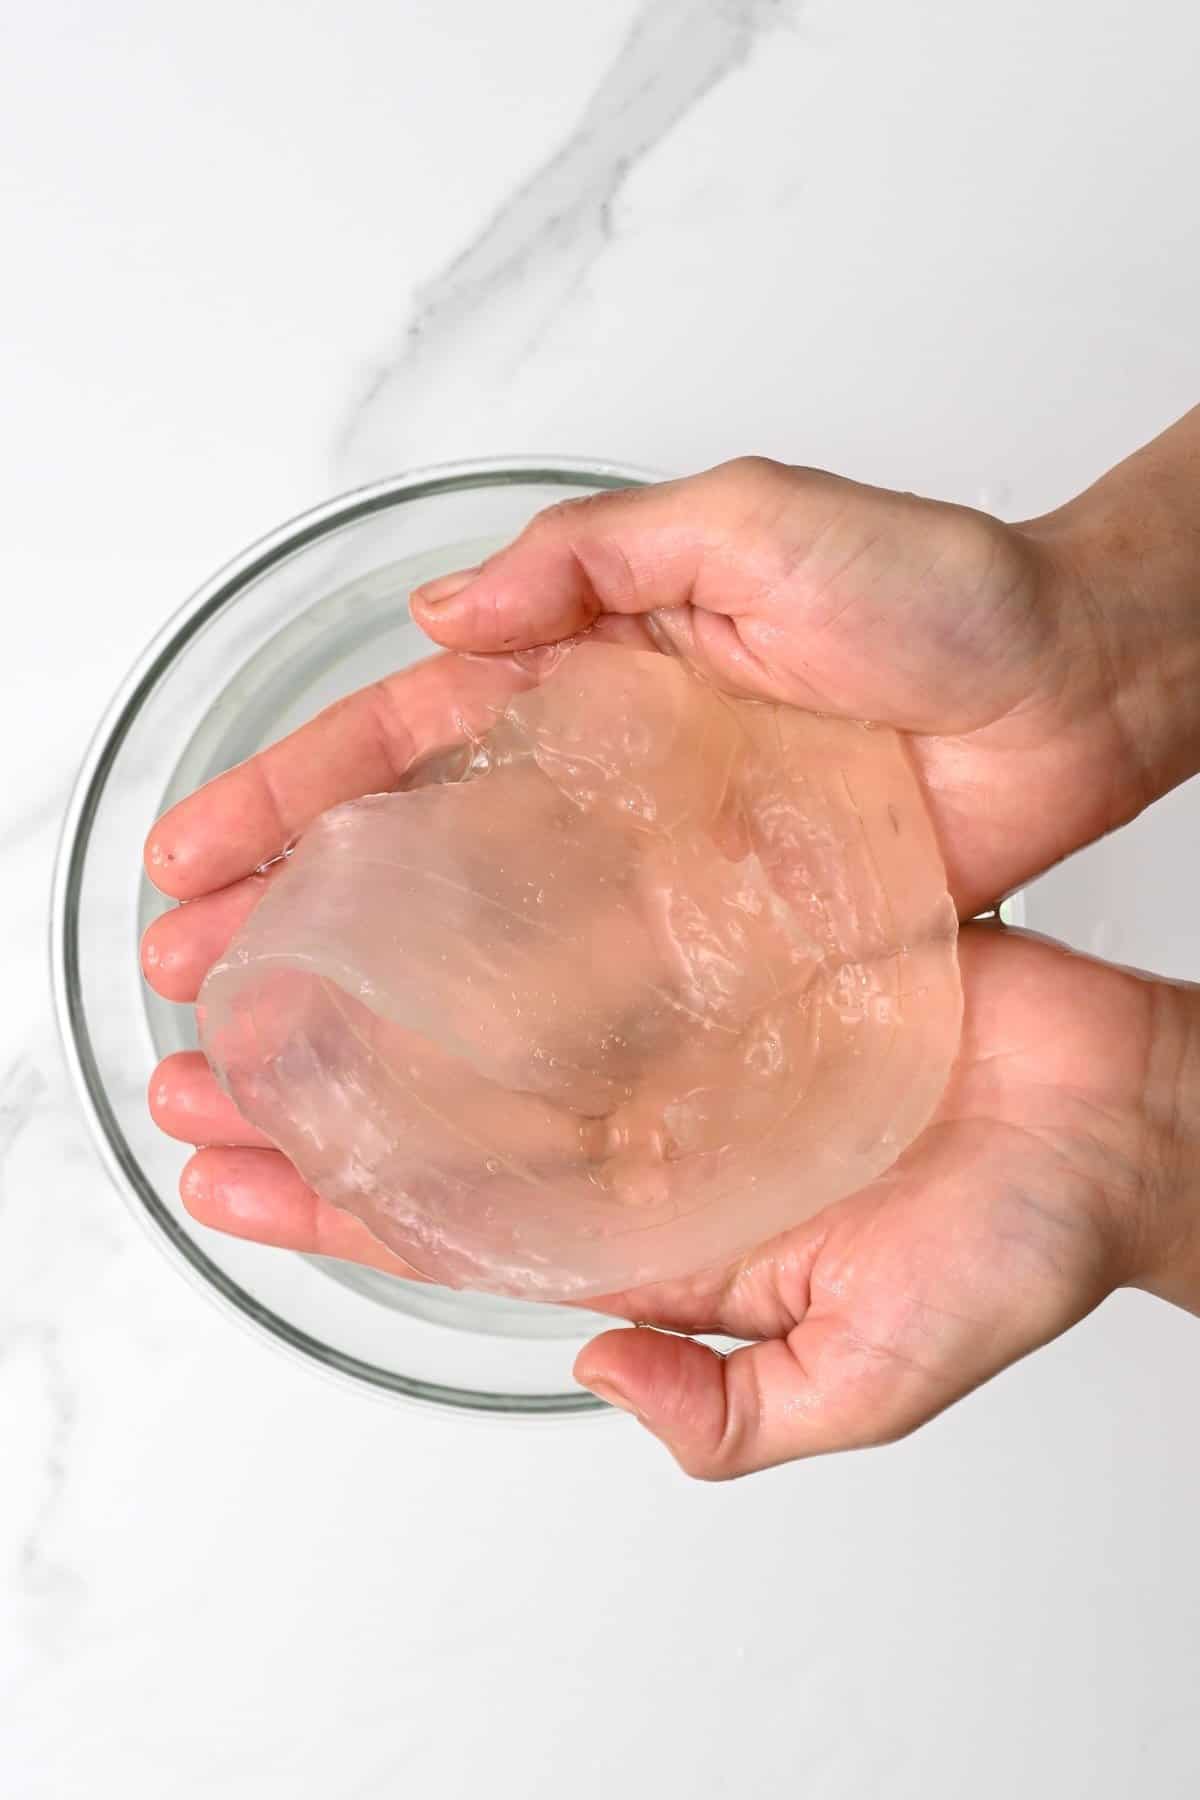 Rinsing aloe vera gel in a bowl